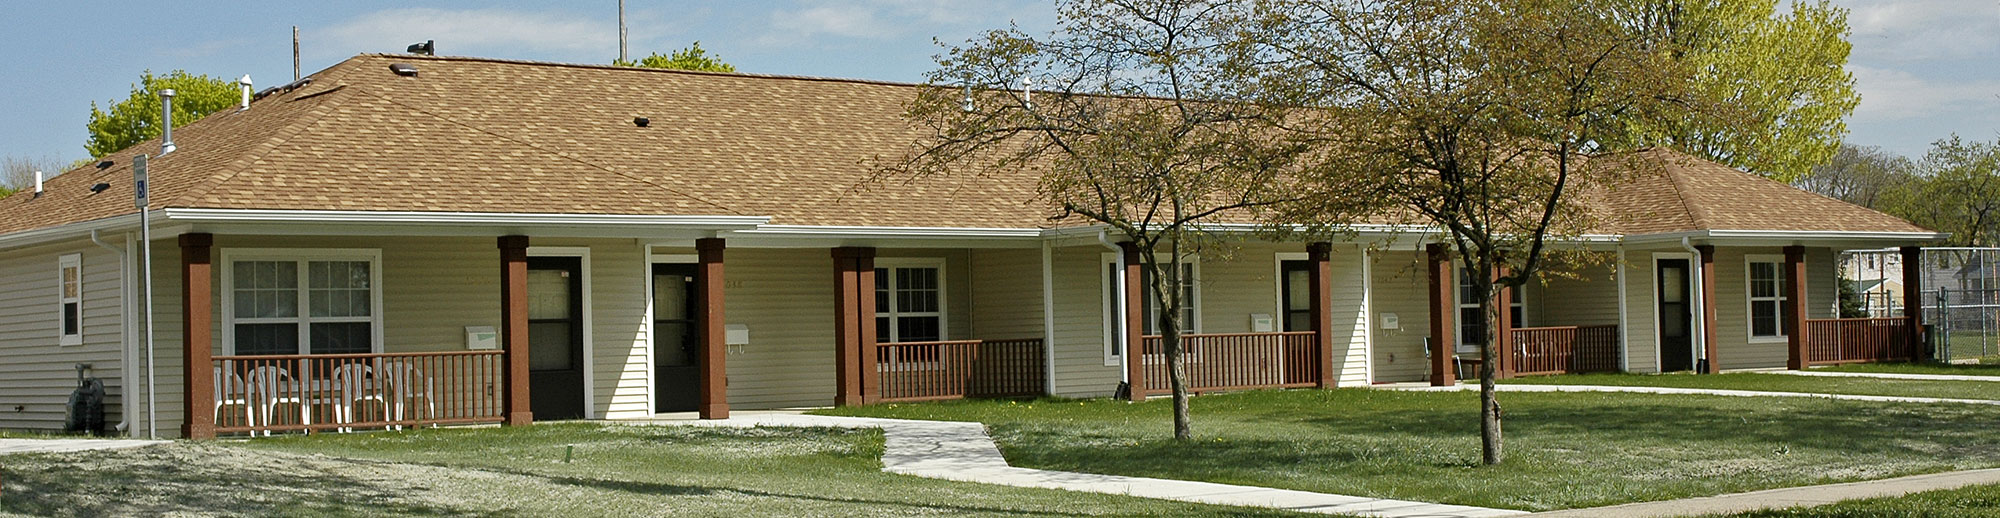 Sheldon Apartments, cottage-style unit